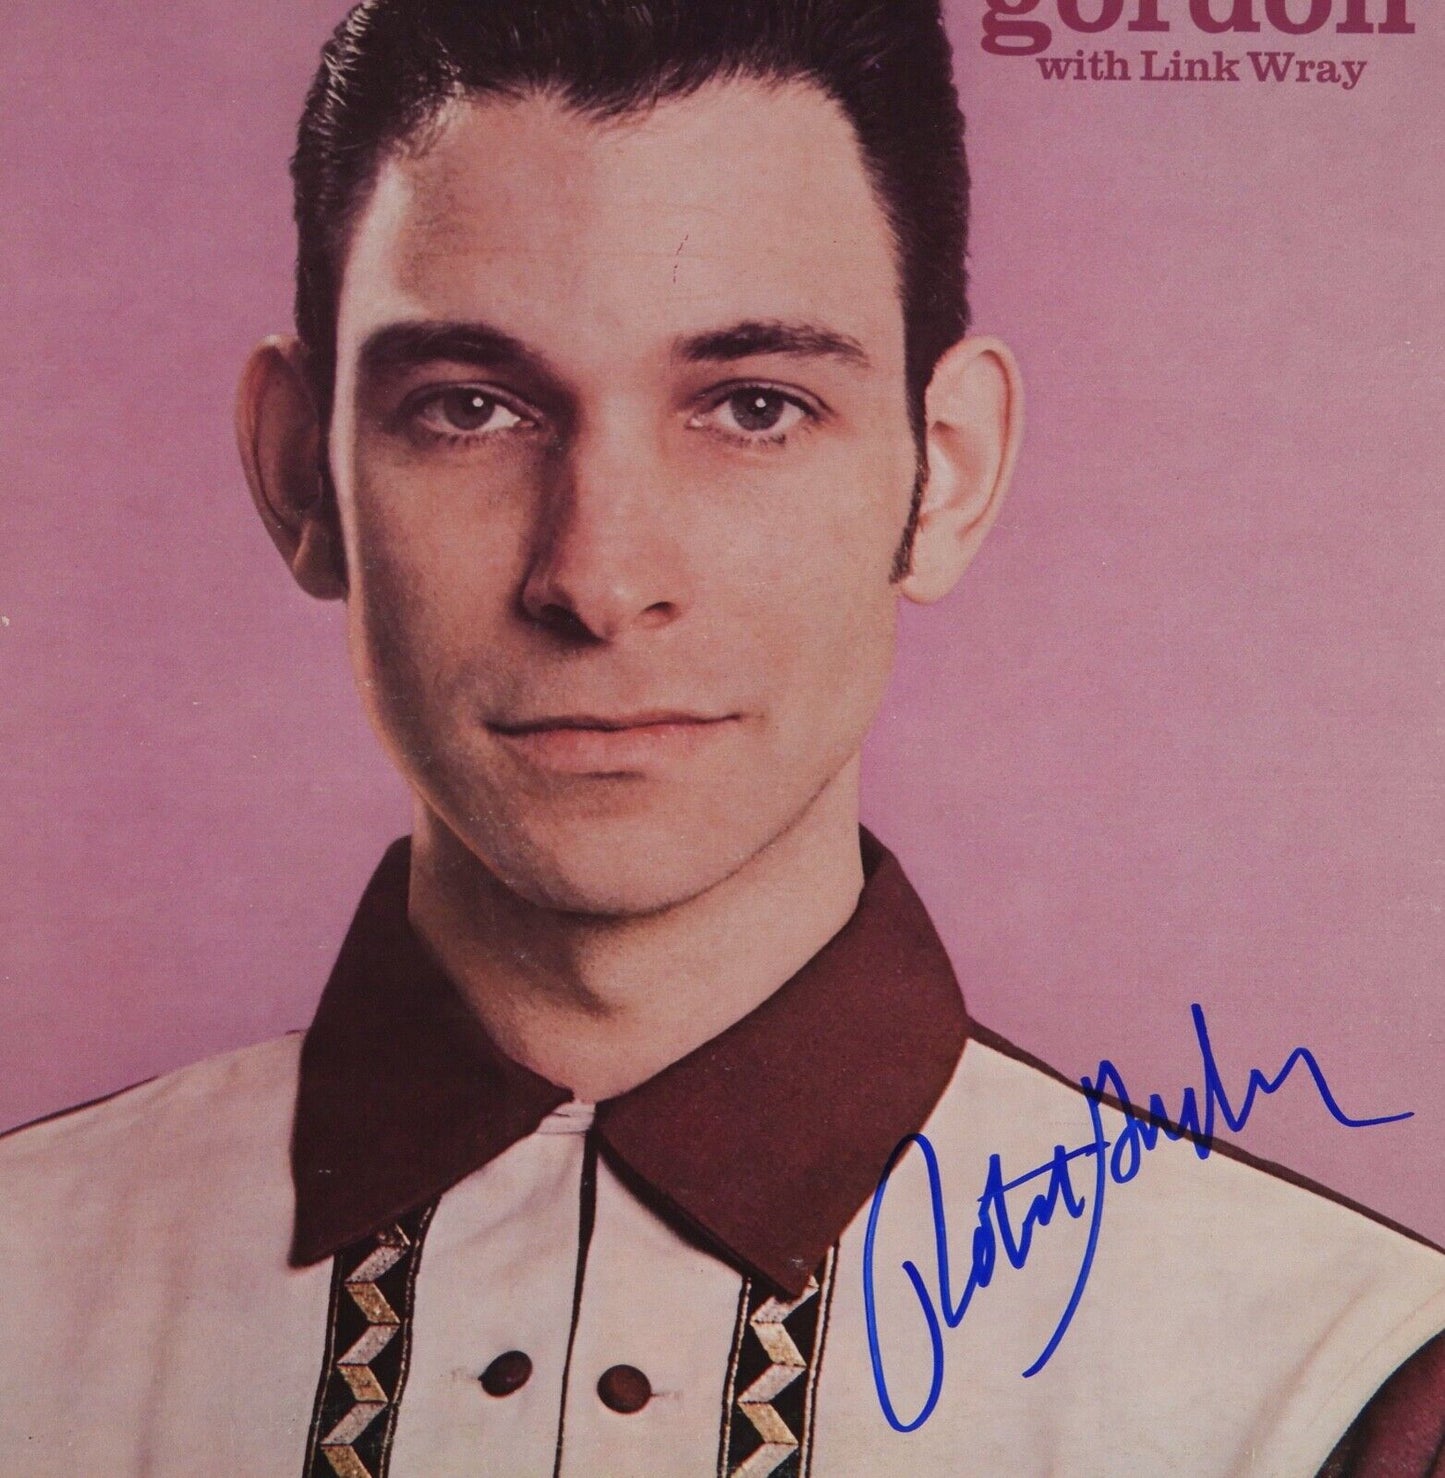 Robert Gordon JSA Signed Autograph Album Vinyl Record LP